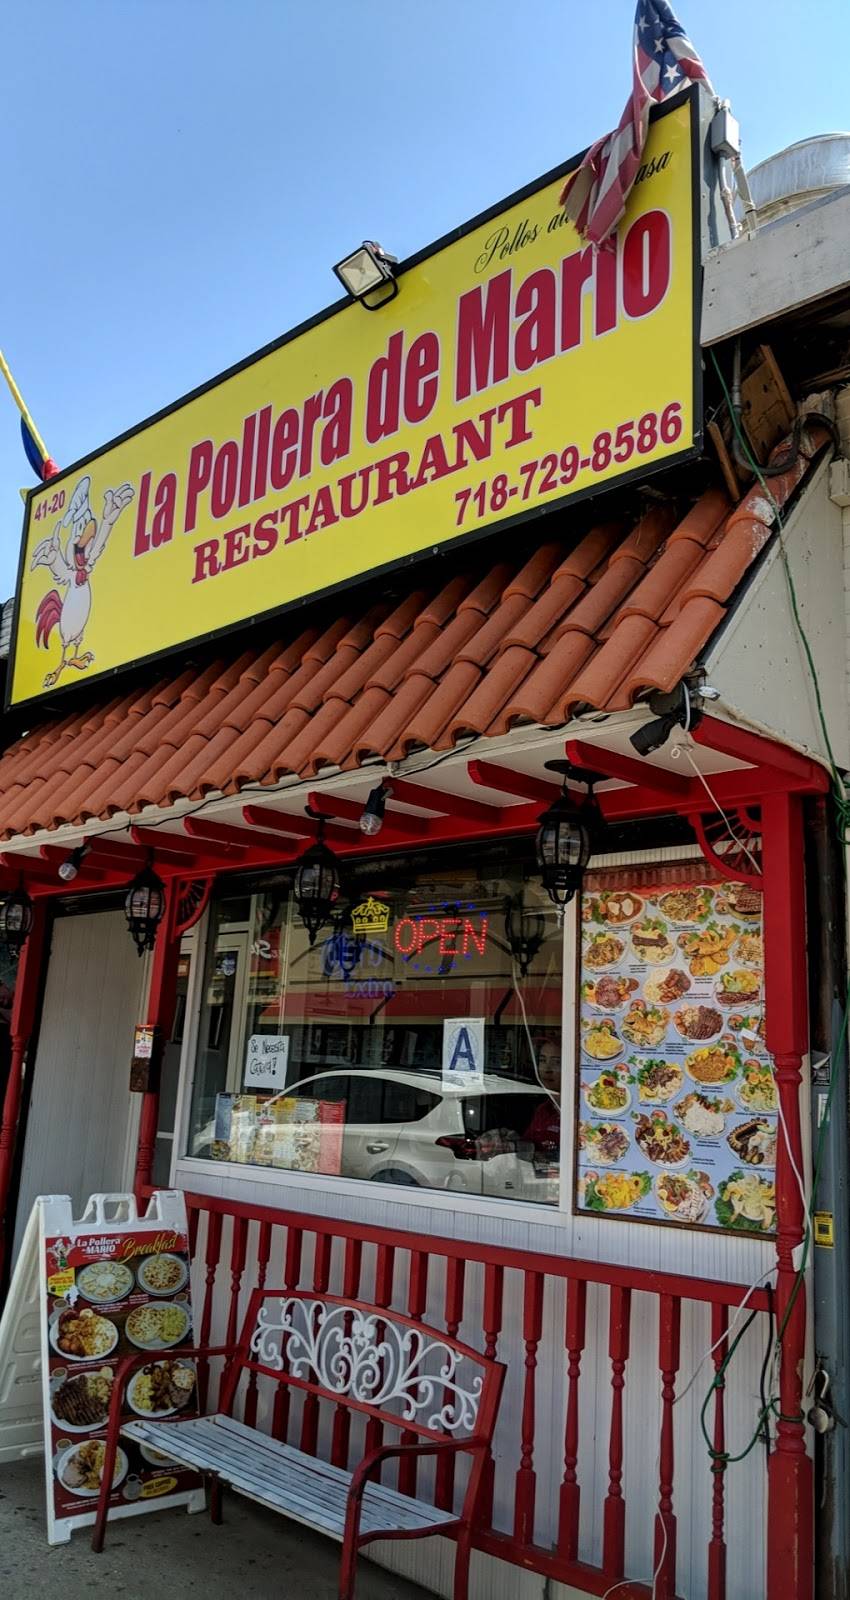 La Pollera de Mario | meal delivery | 4120 Greenpoint Ave, Sunnyside, NY 11104, USA | 7187298586 OR +1 718-729-8586